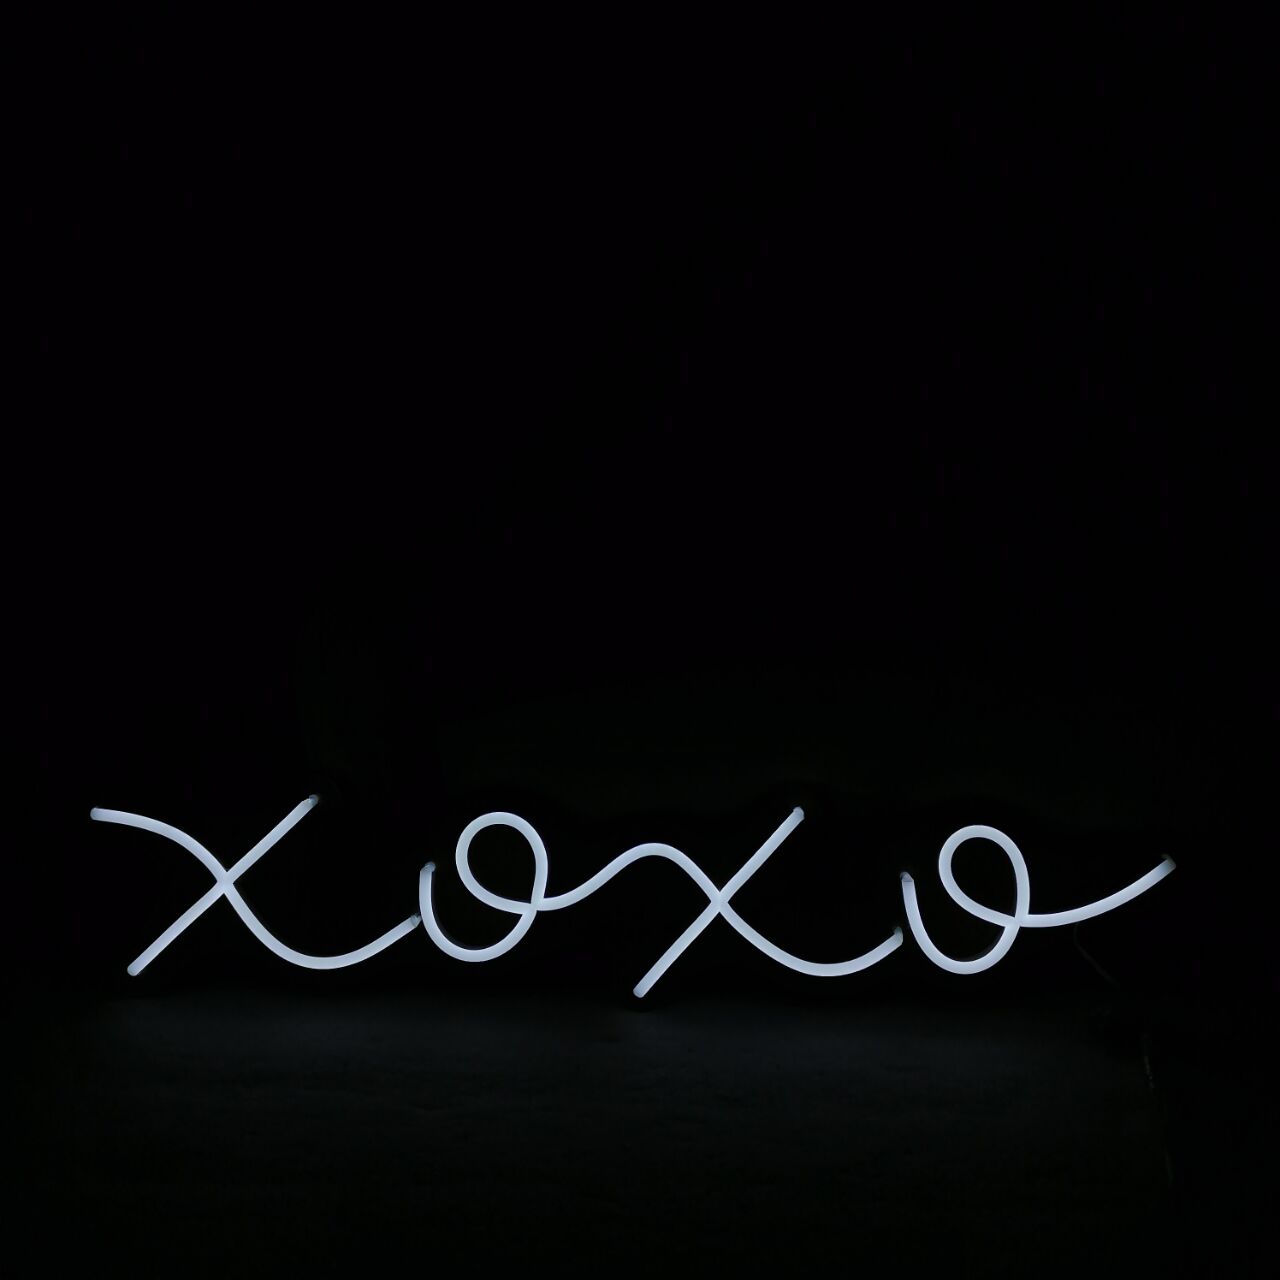 "XOXO" LED Neon Sign